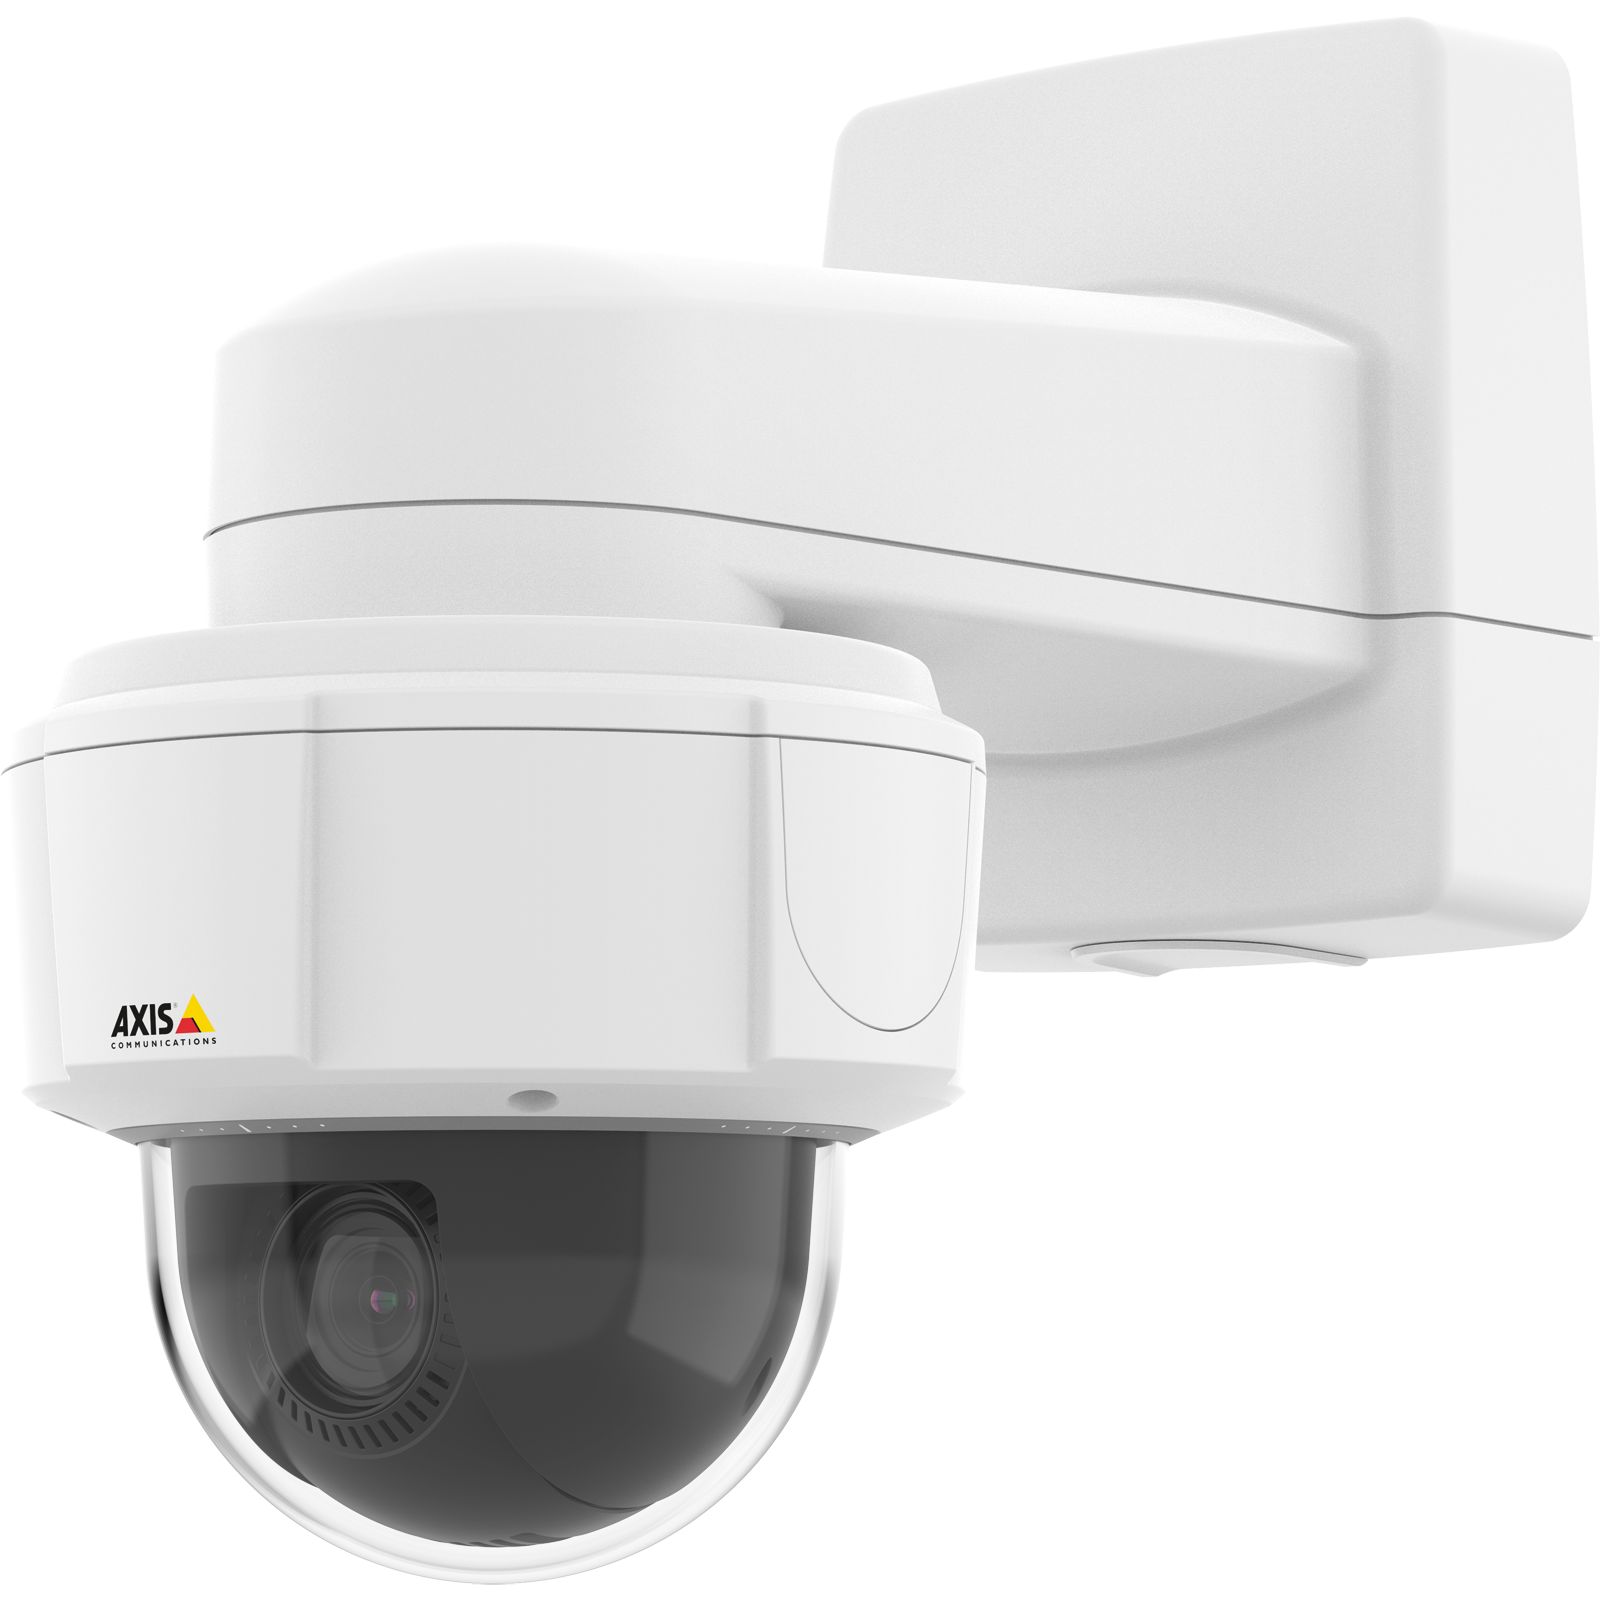 AXIS M5525-E PTZ Network Camera